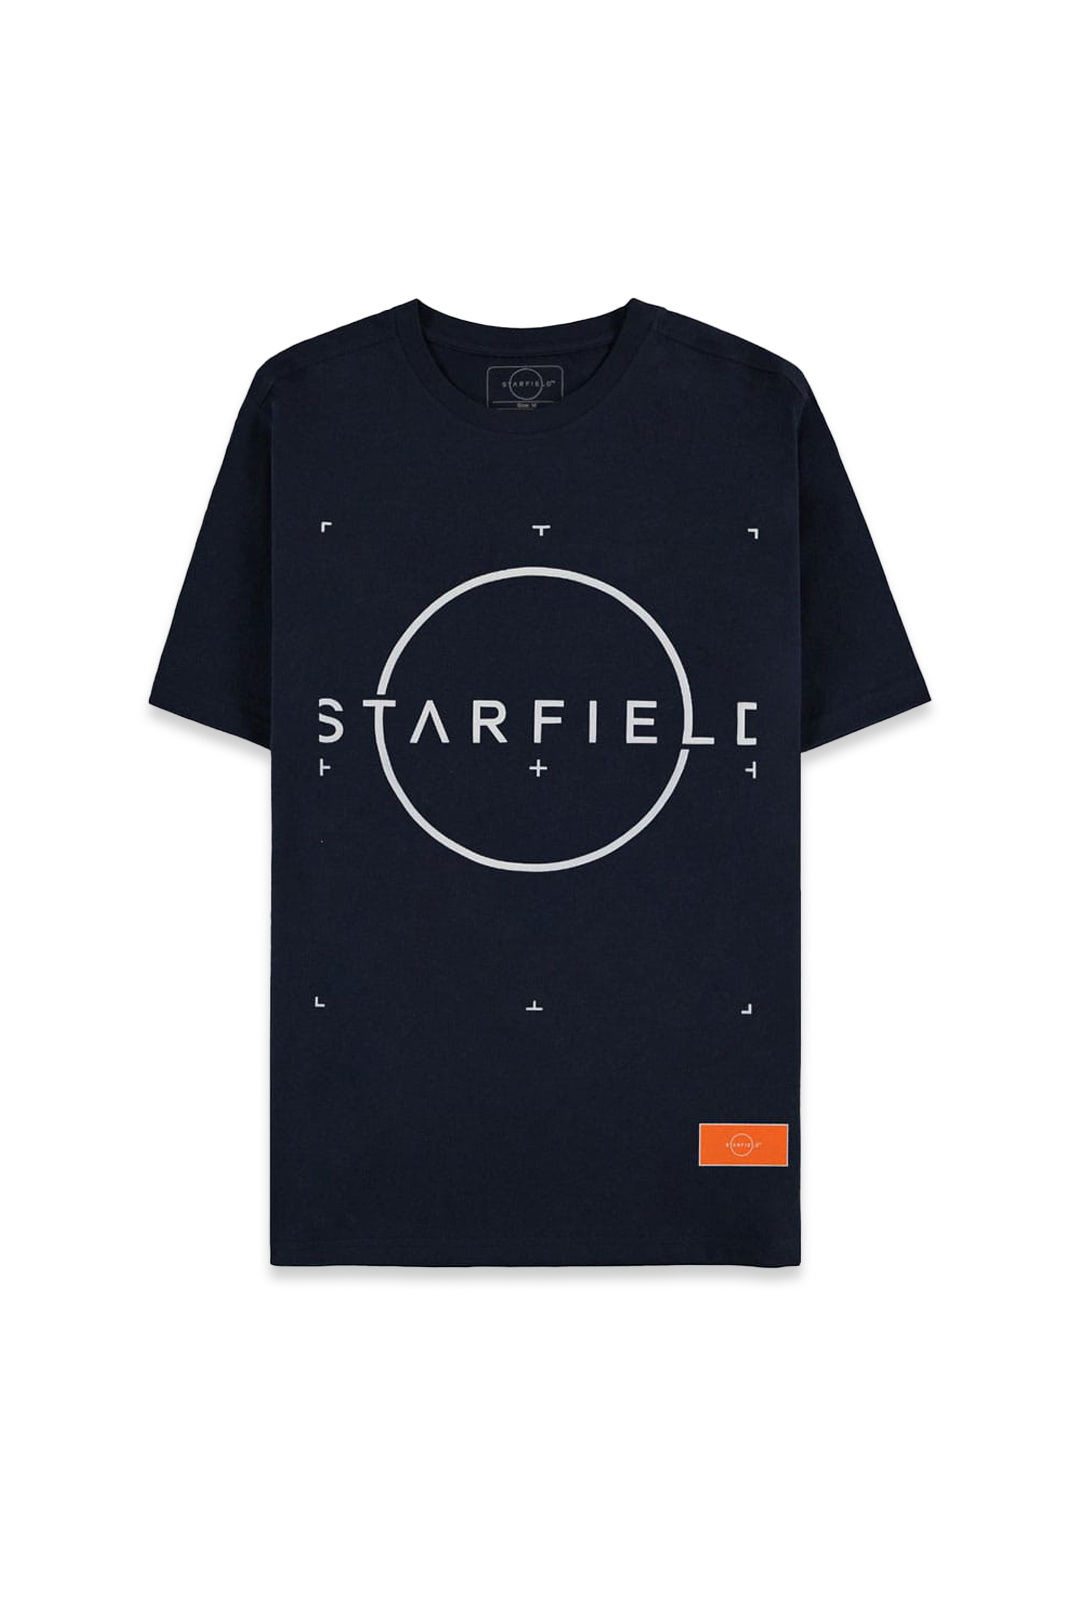 T-Shirt - Starfield -  Cosmic Perspective